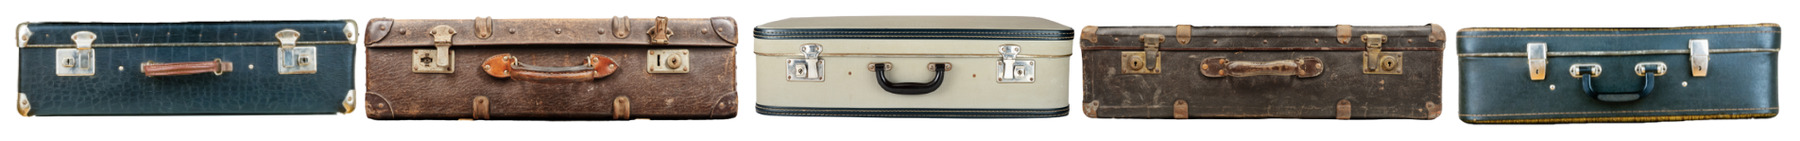 Suitcase divider